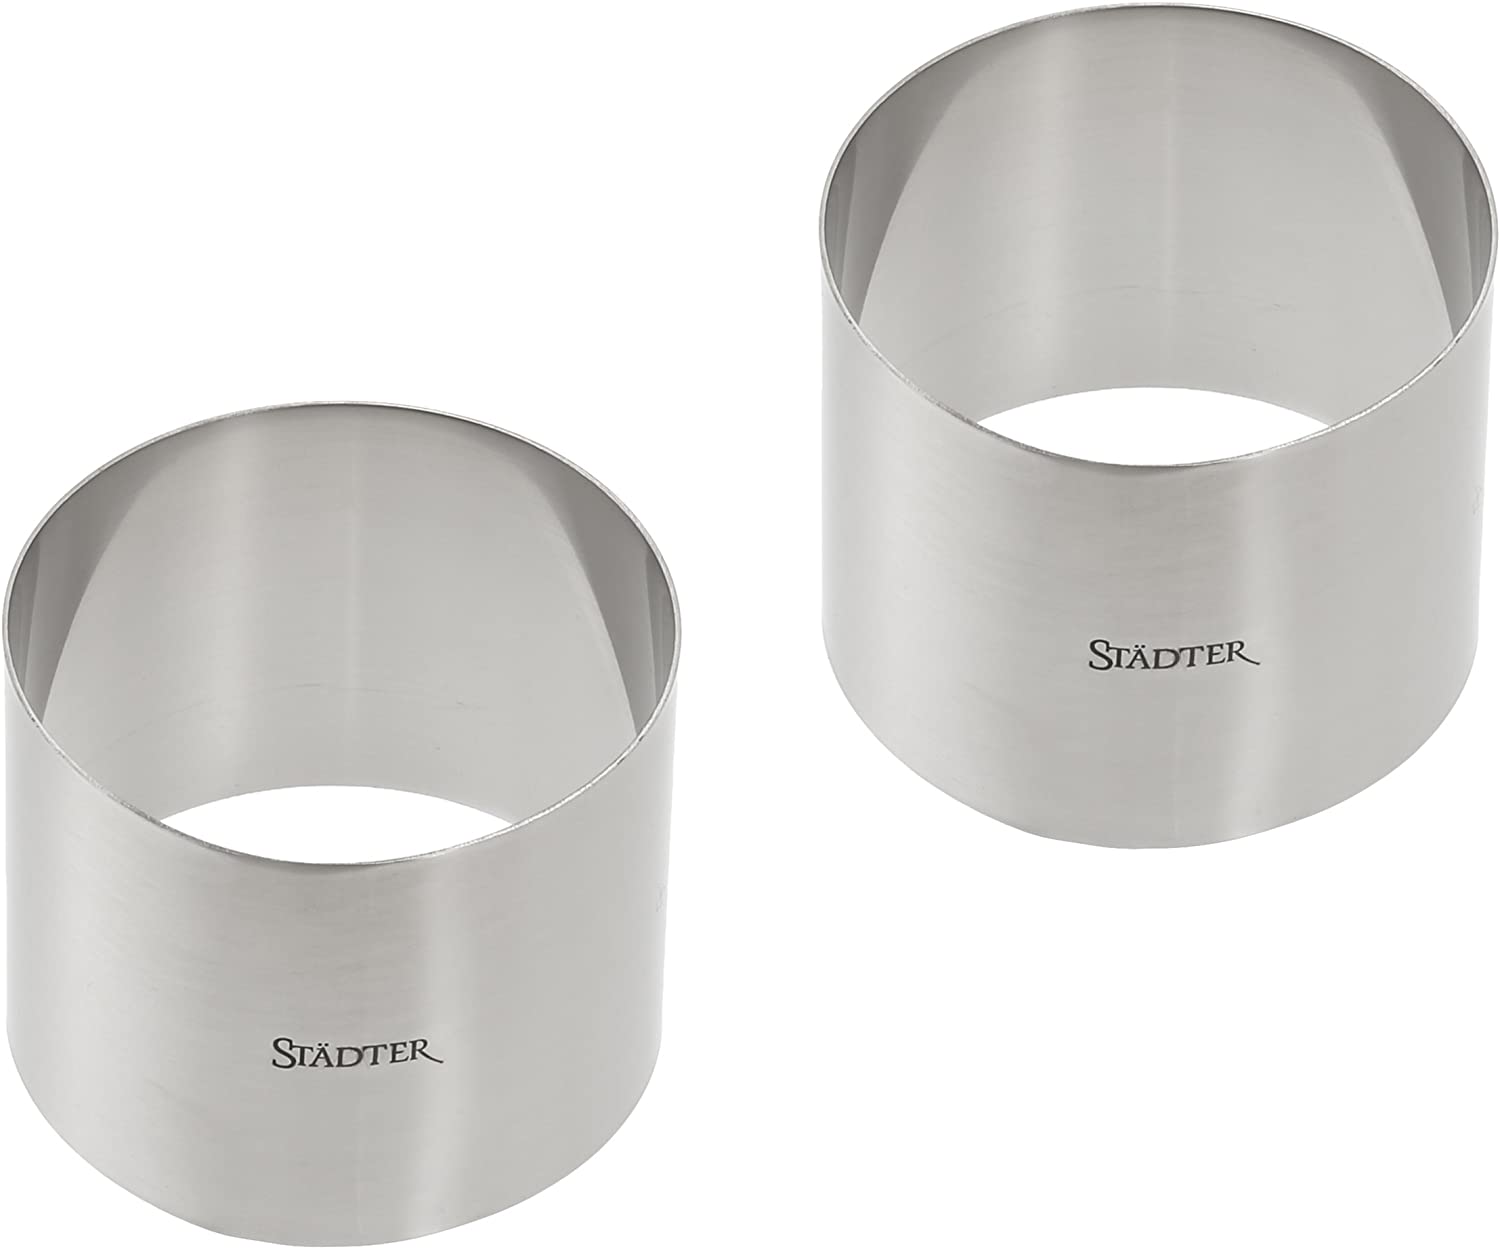 Städter 625556 Dessert Ring – Set of 2 – 7 cm diameter